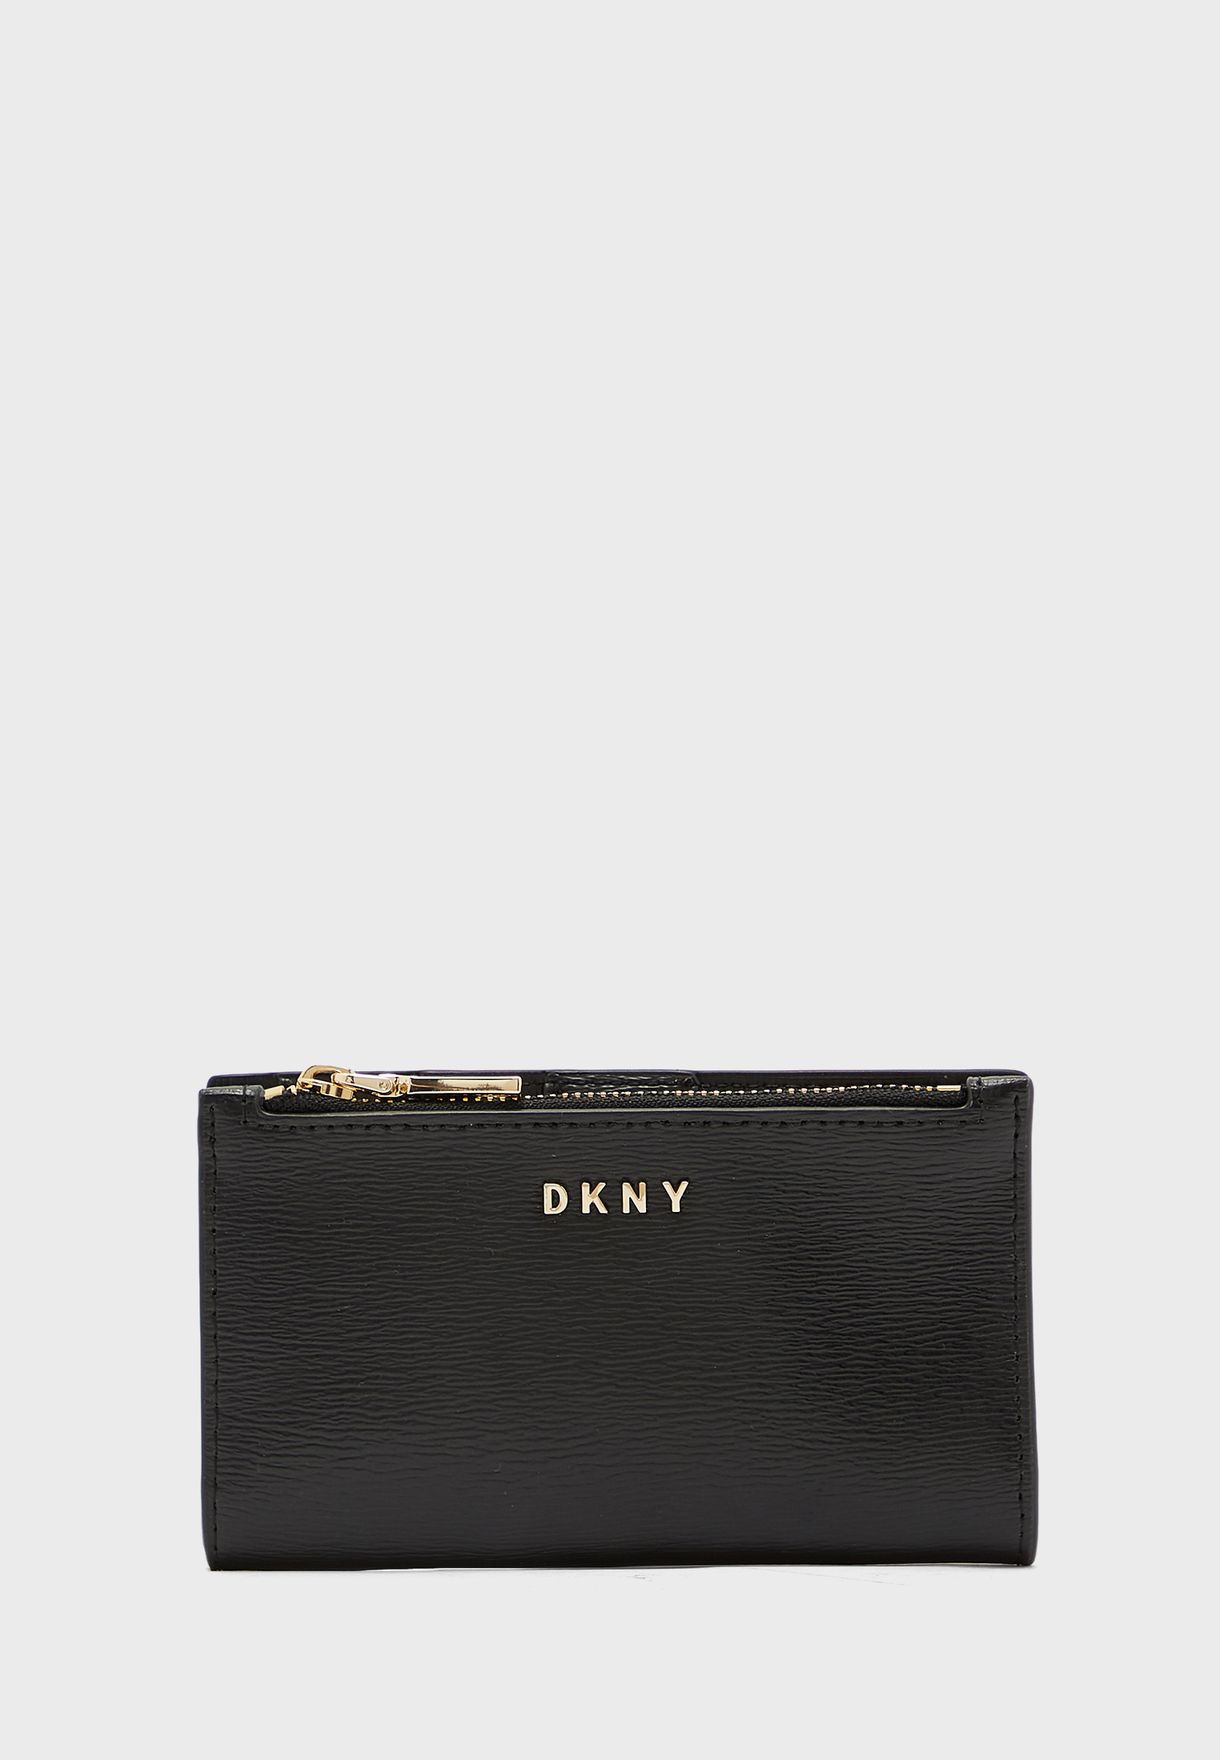 dkny black purse